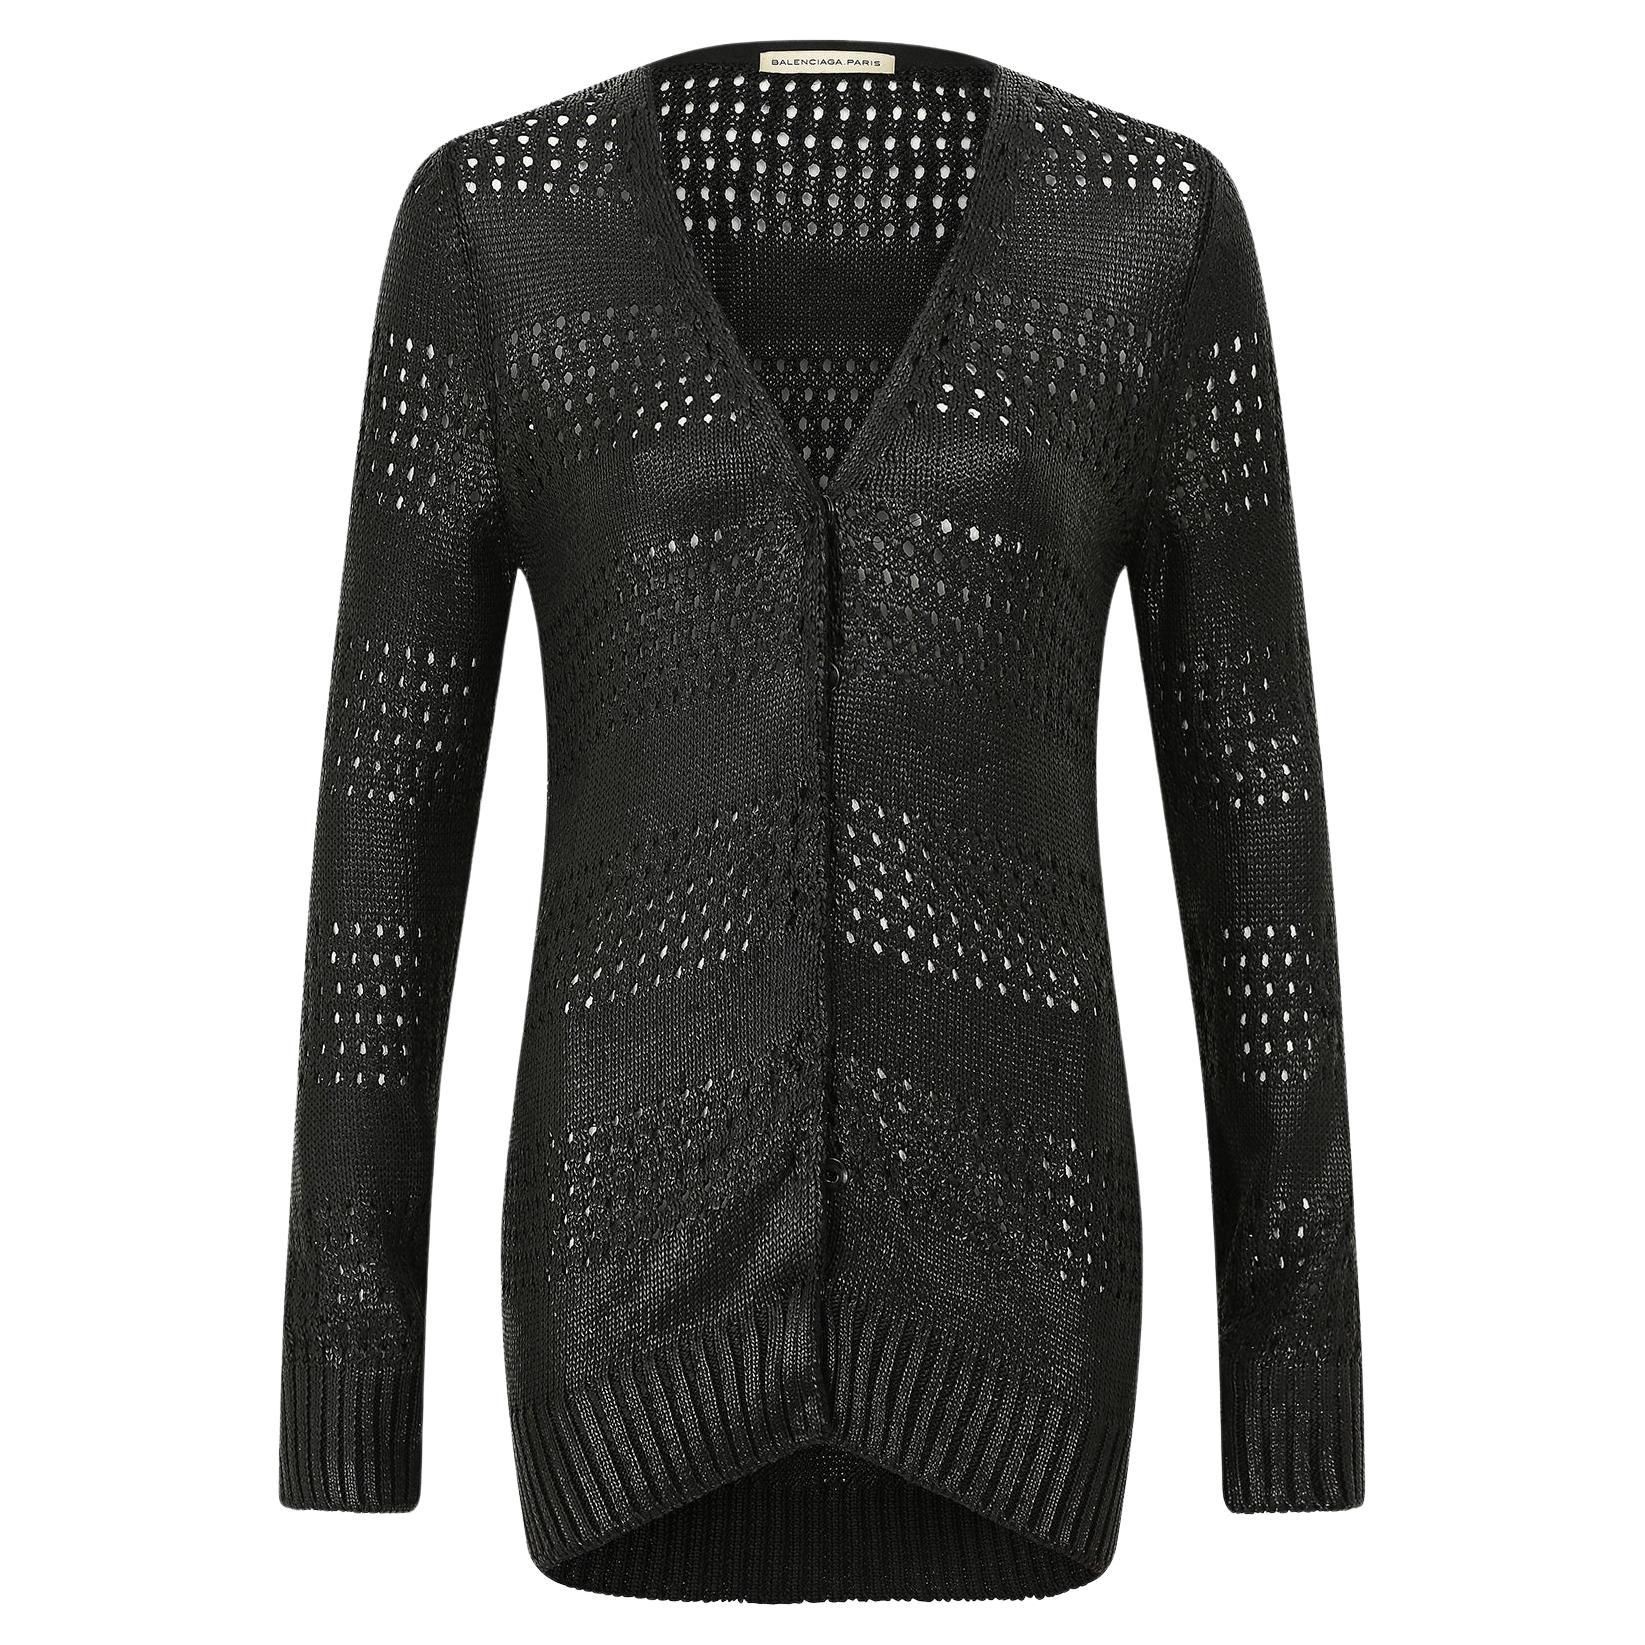 2010s Balenciaga Textured Black Knit Long Cardigan